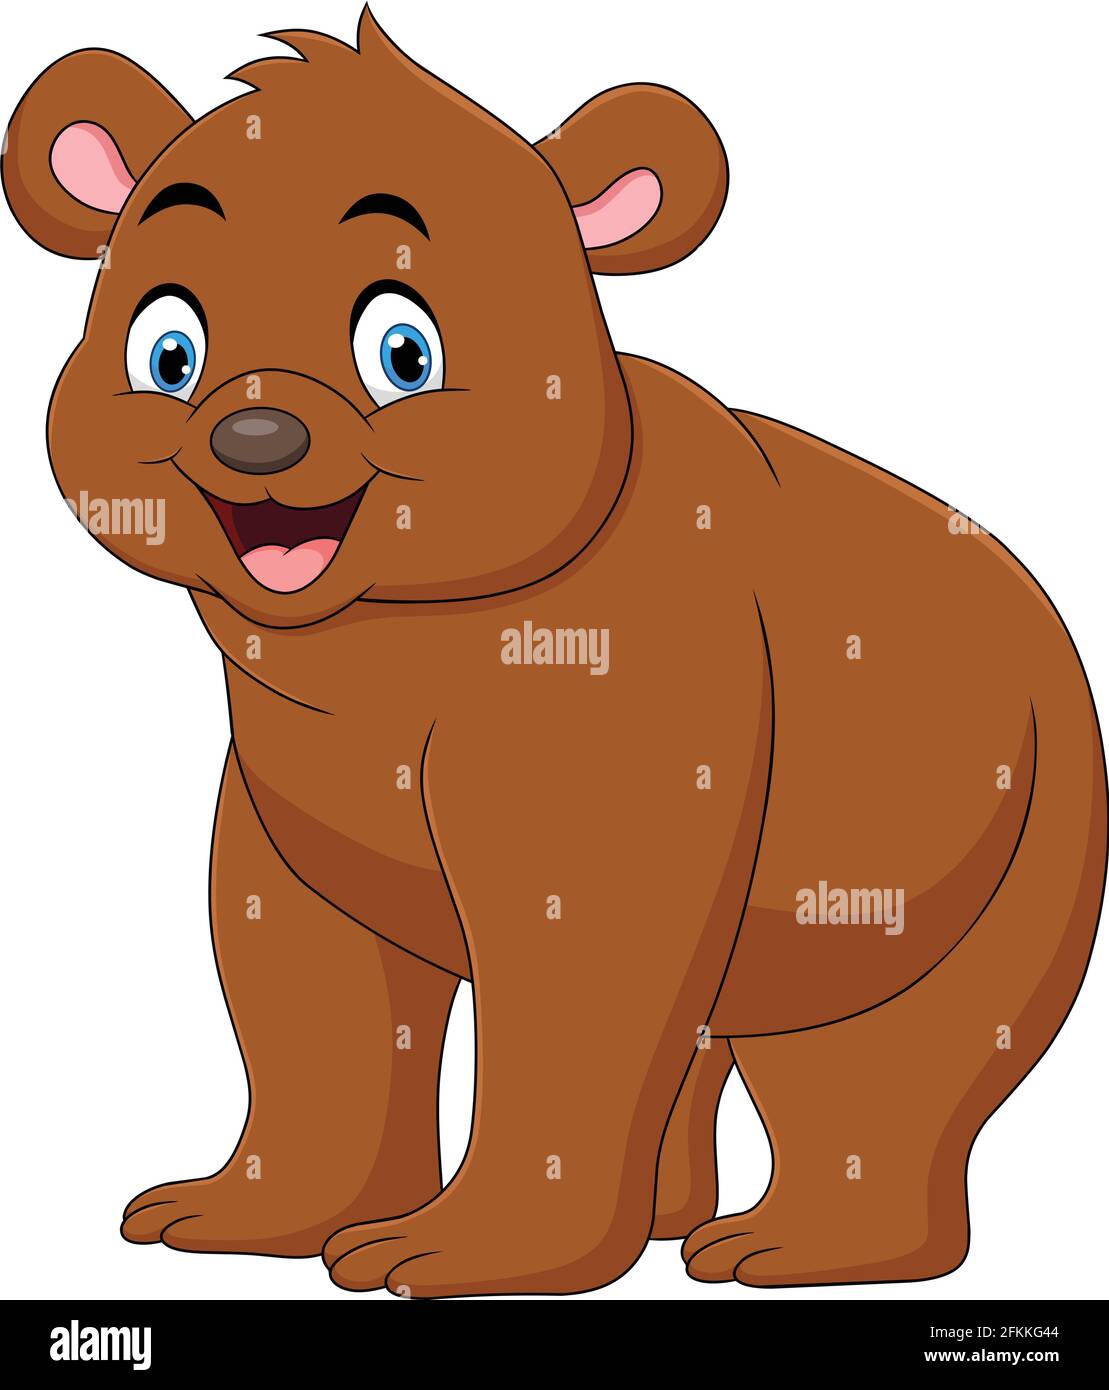 Cartoon waving teddy bear hi-res stock photography and images - Alamy